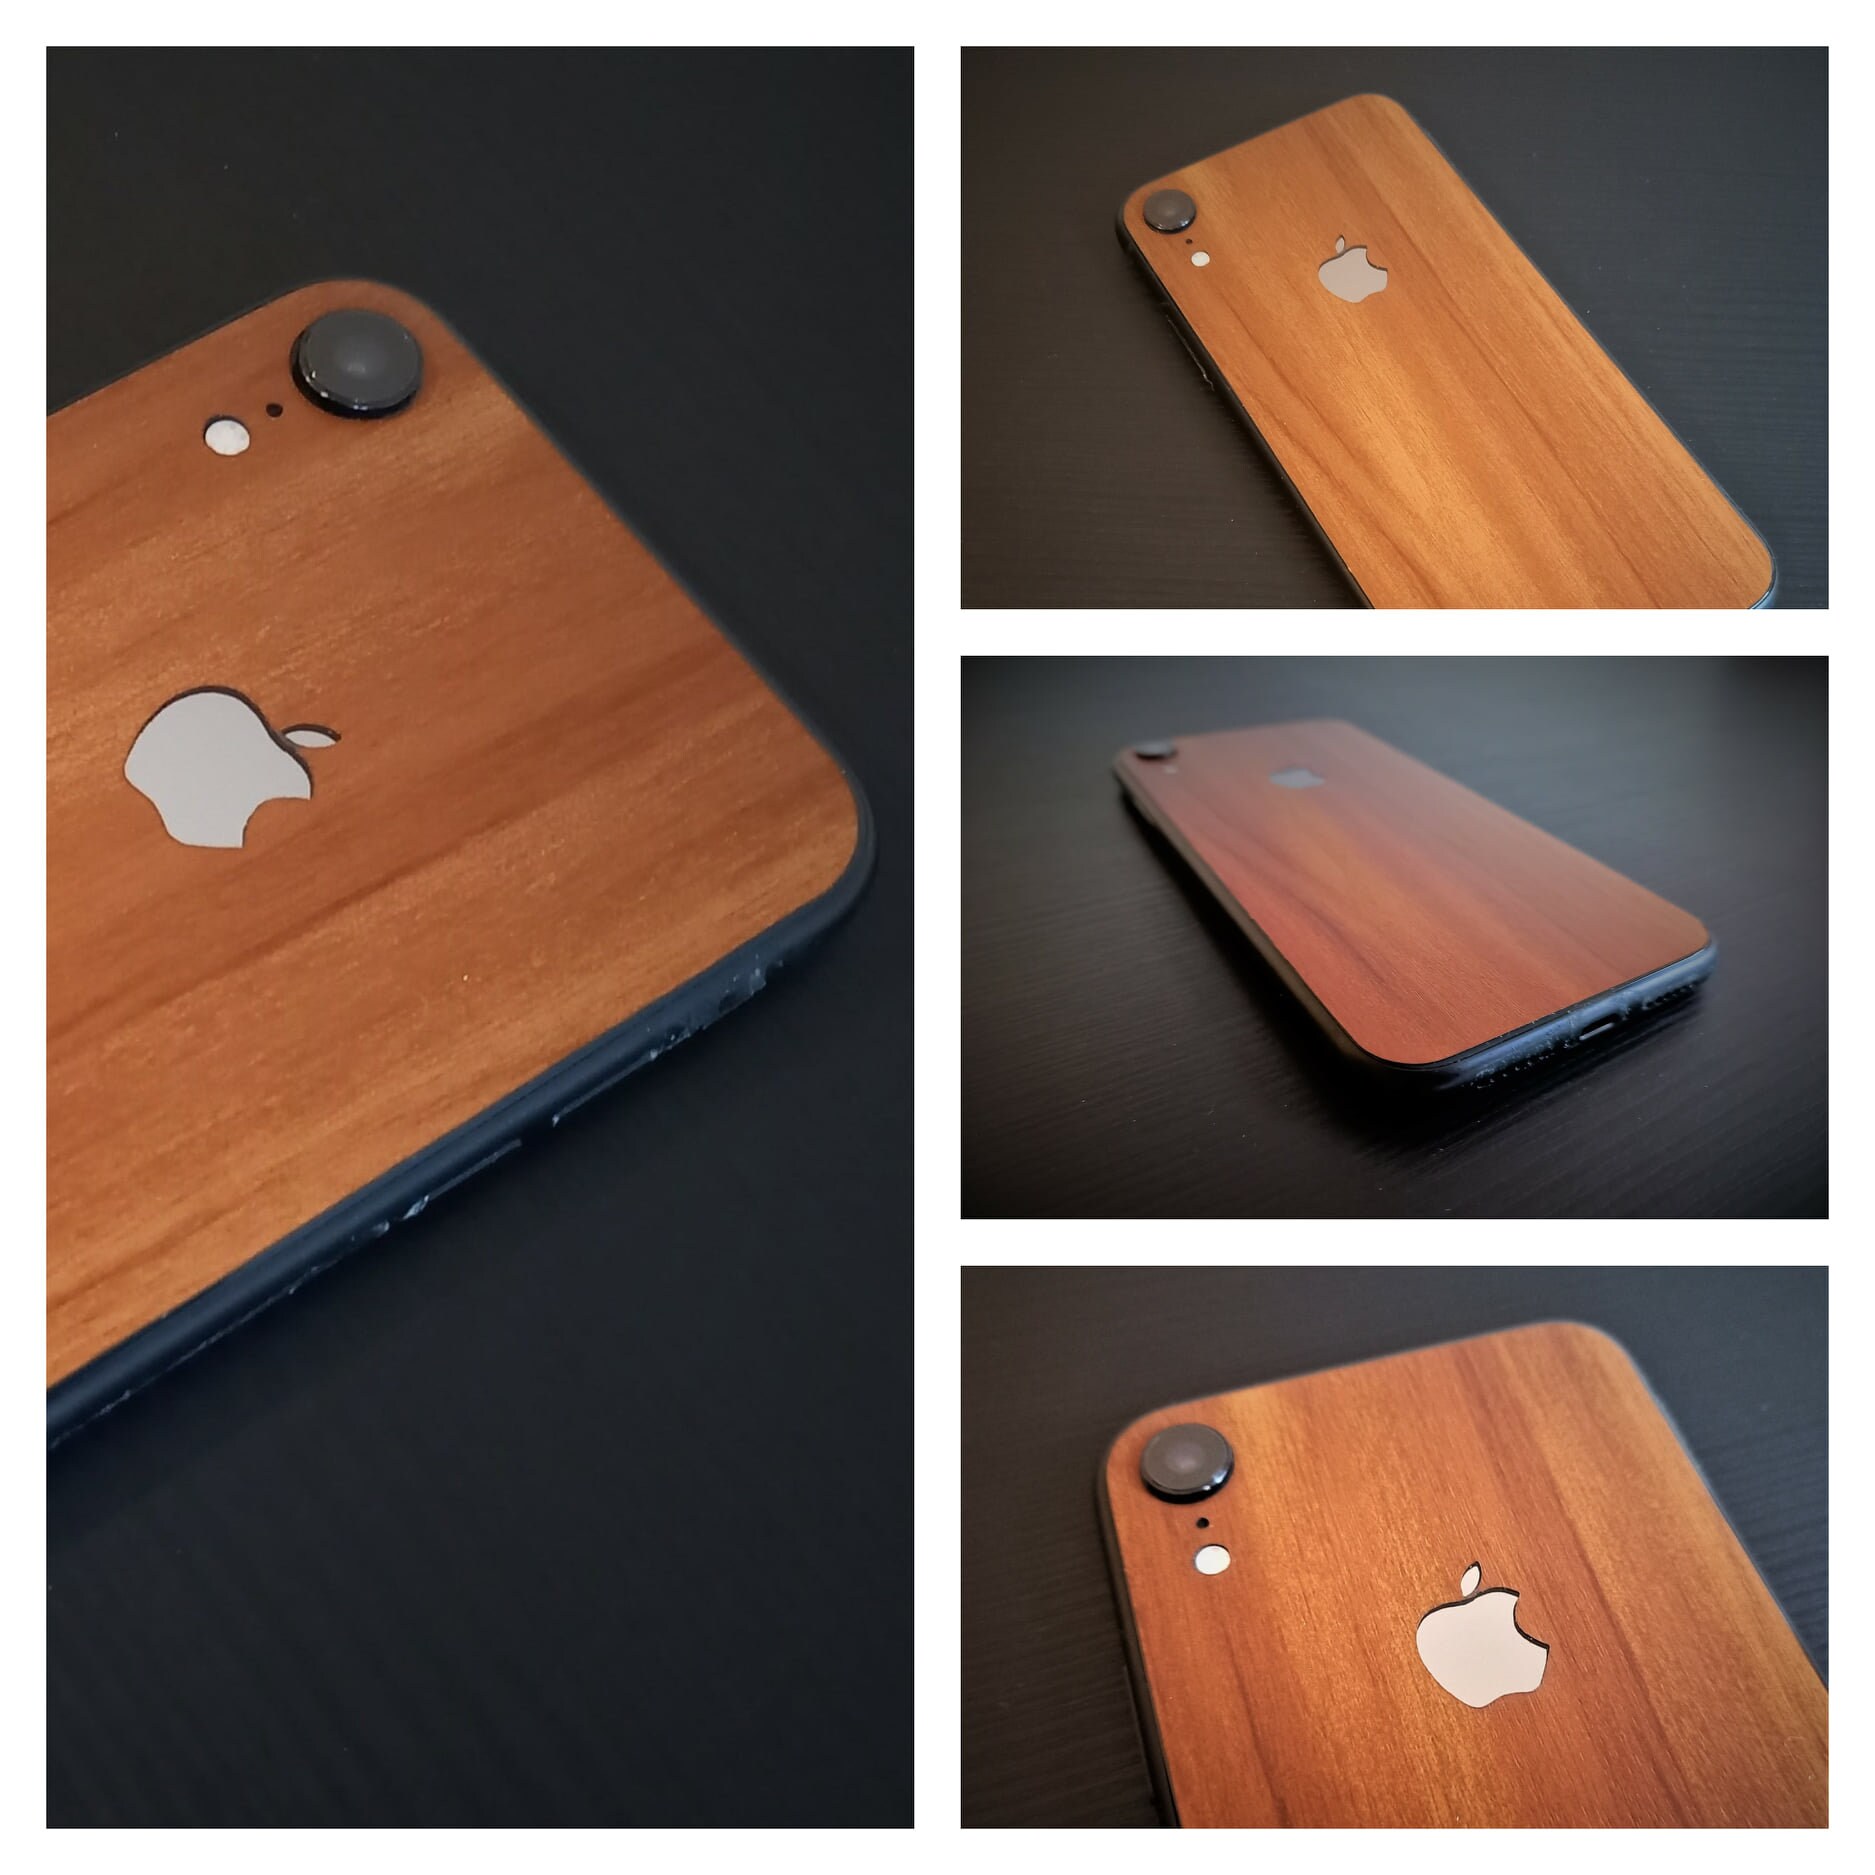 Coque iPhone SE 2020 en bois - Ecran de protection en verre trempé inclus -  Étui & Coque - KIBODO